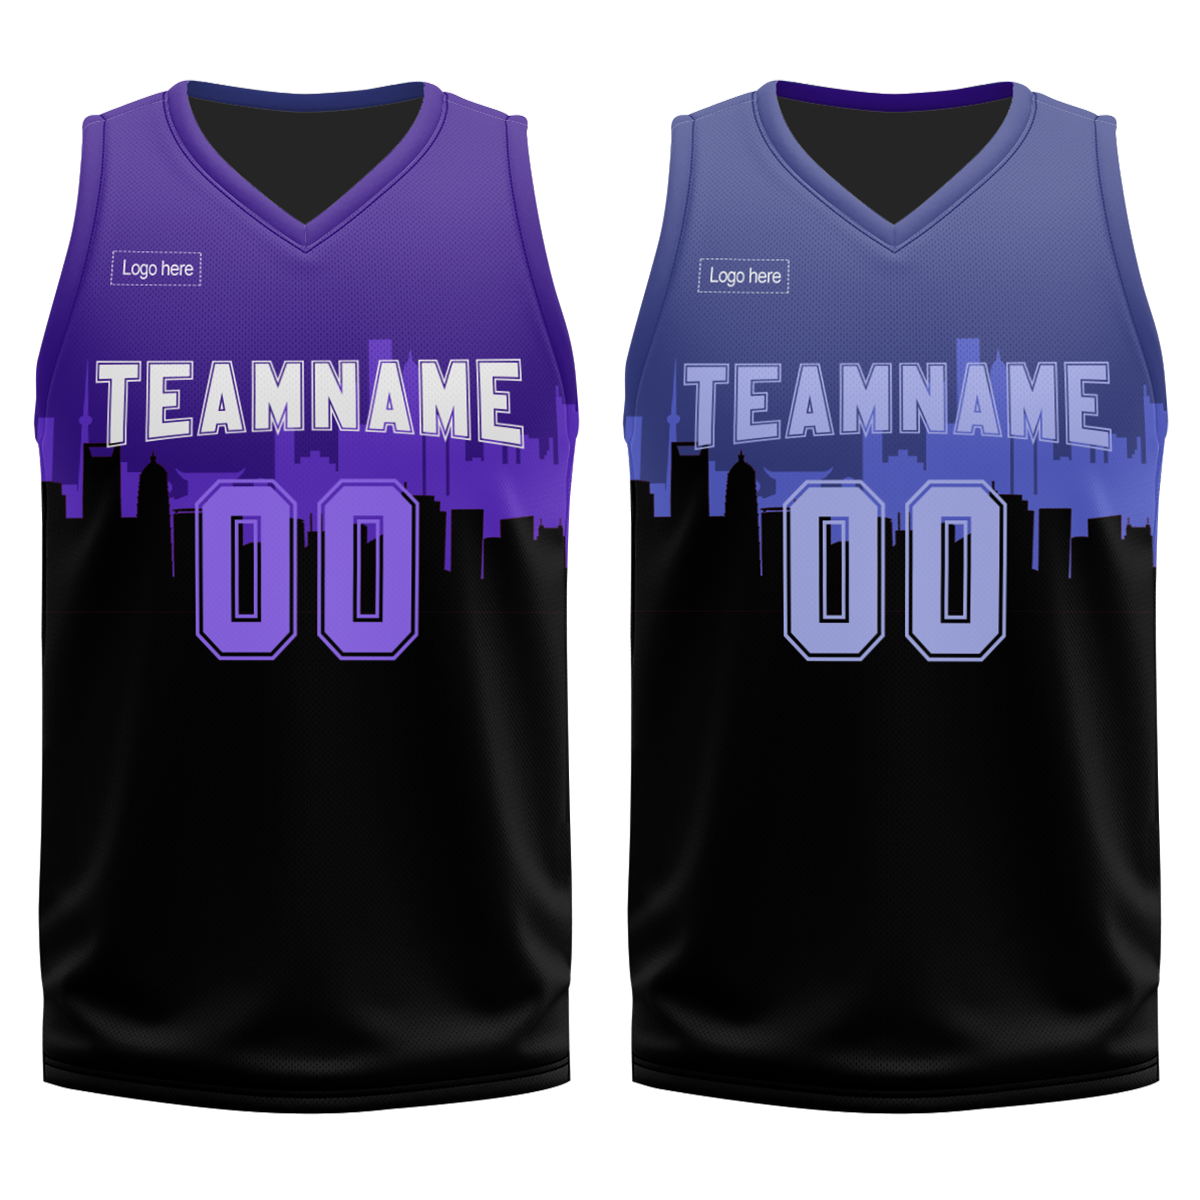 high-quality-unique-basketball-jersey-pattern-design-full-sublimation-digital-printing-oem-service-basketball-uniform-at-cj-pod-4